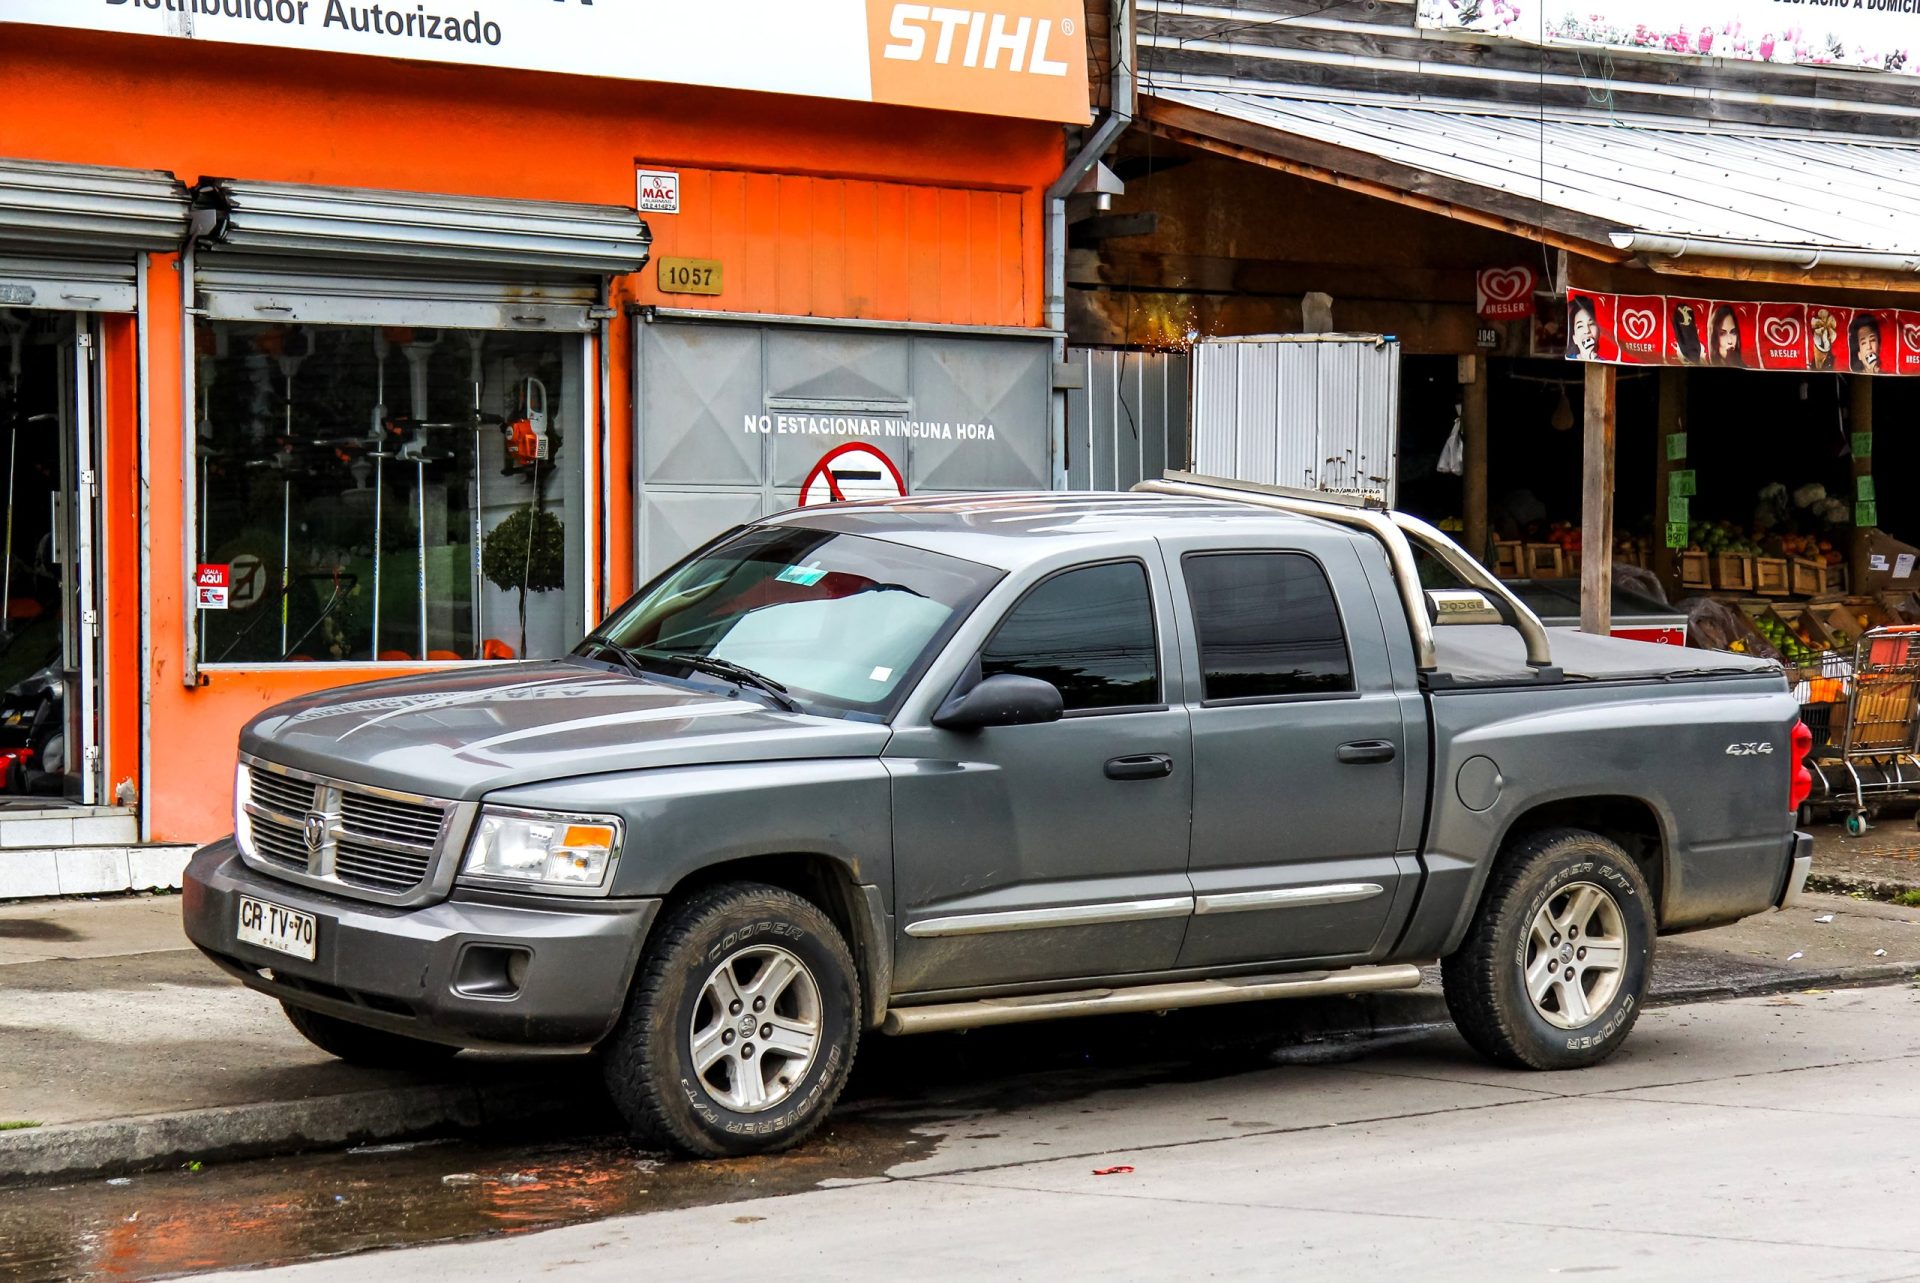 2010 Dodge Dakota parked beside a city street